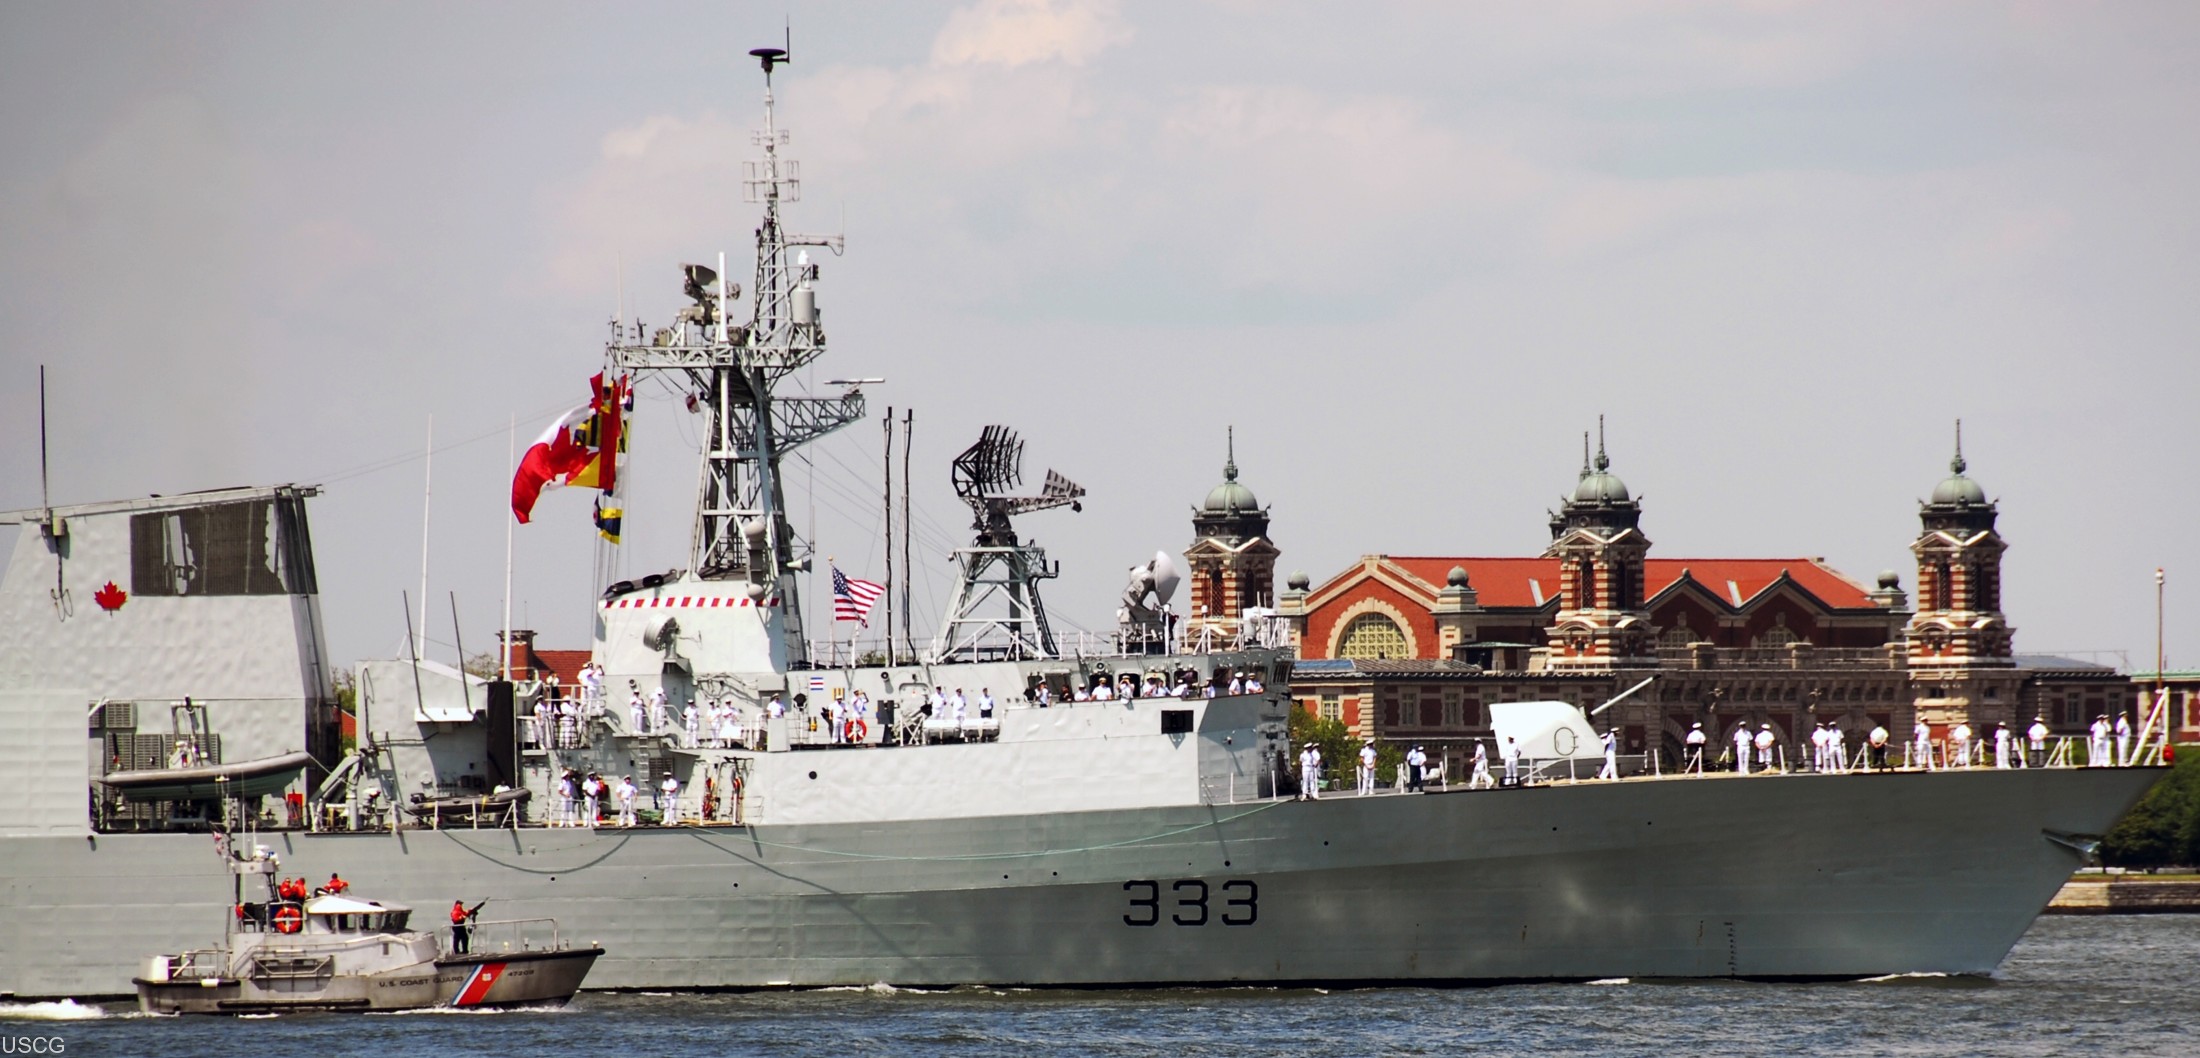 ffh-333 hmcs toronto halifax class helicopter patrol frigate ncsm royal canadian navy 47